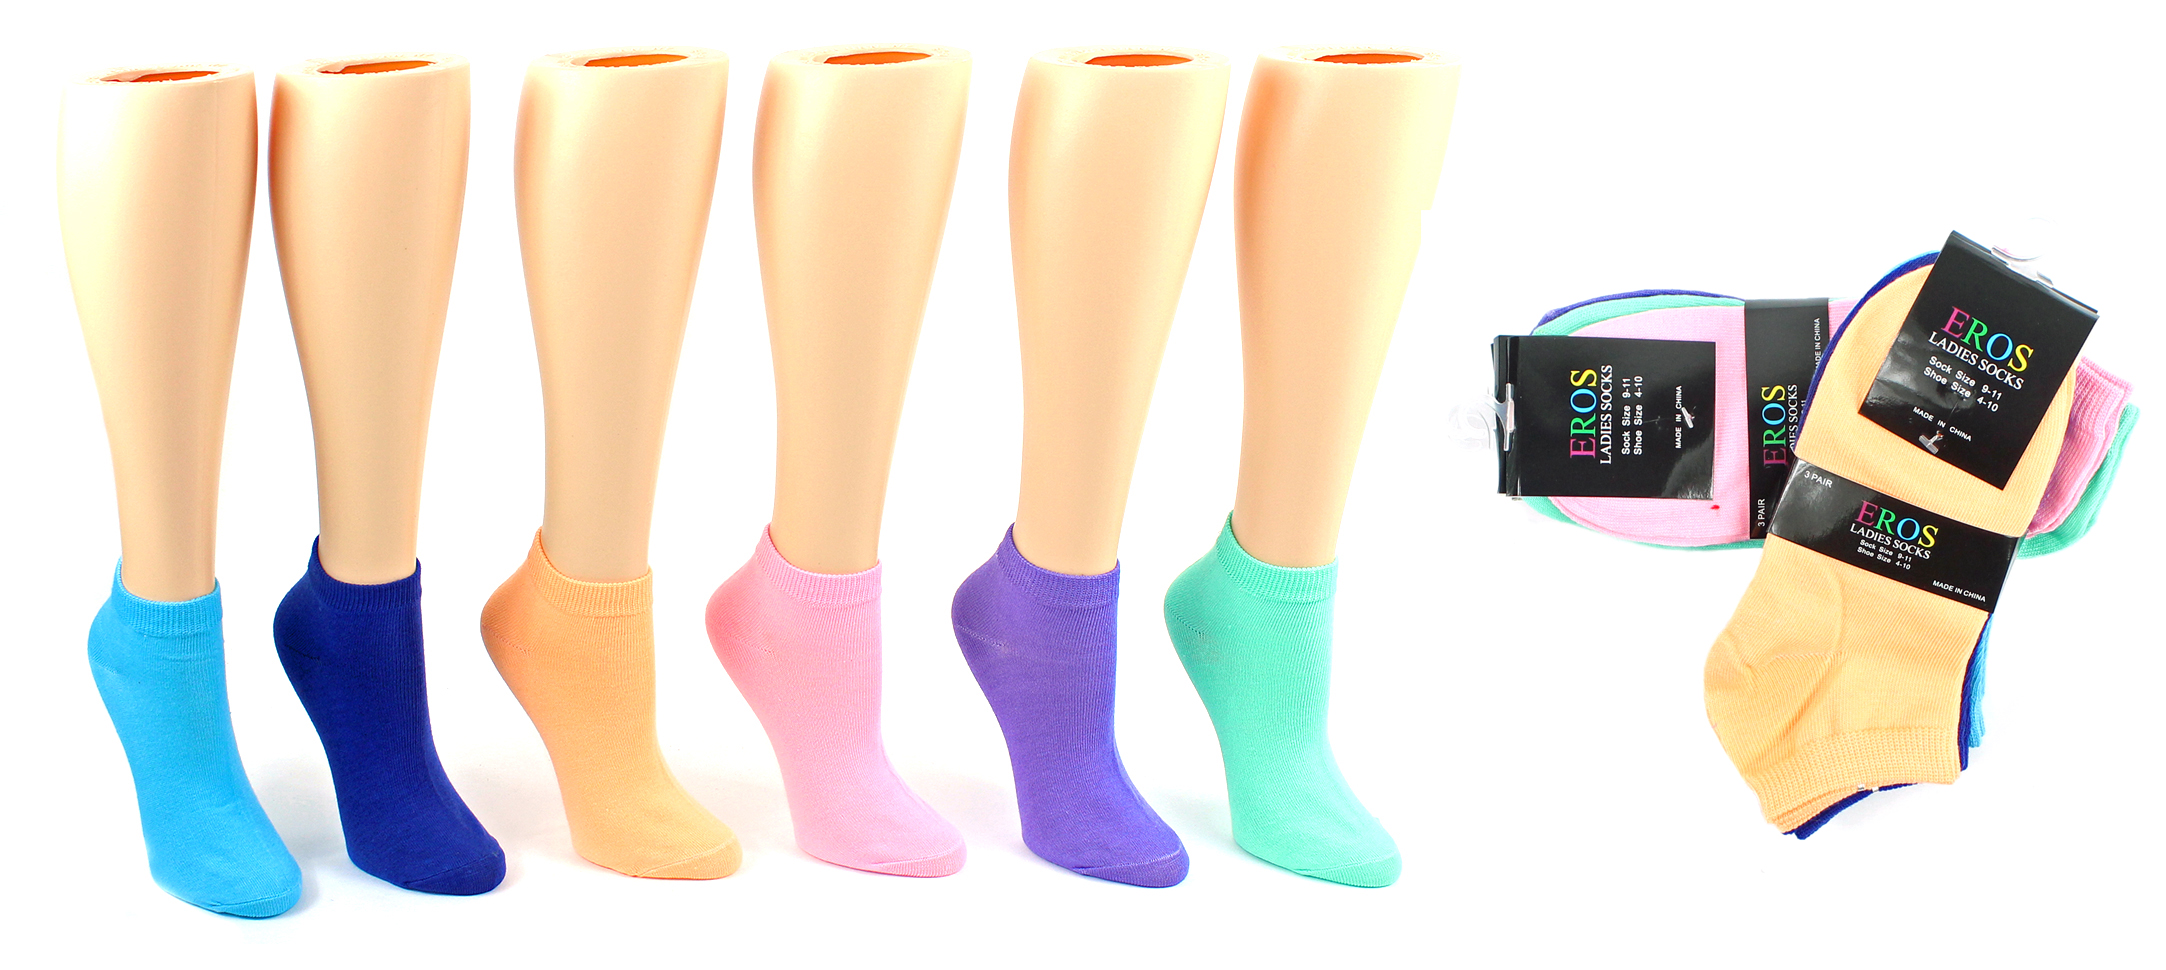 Women's Low Cut Novelty Socks - Solid Pastel Colors - Size 9-11